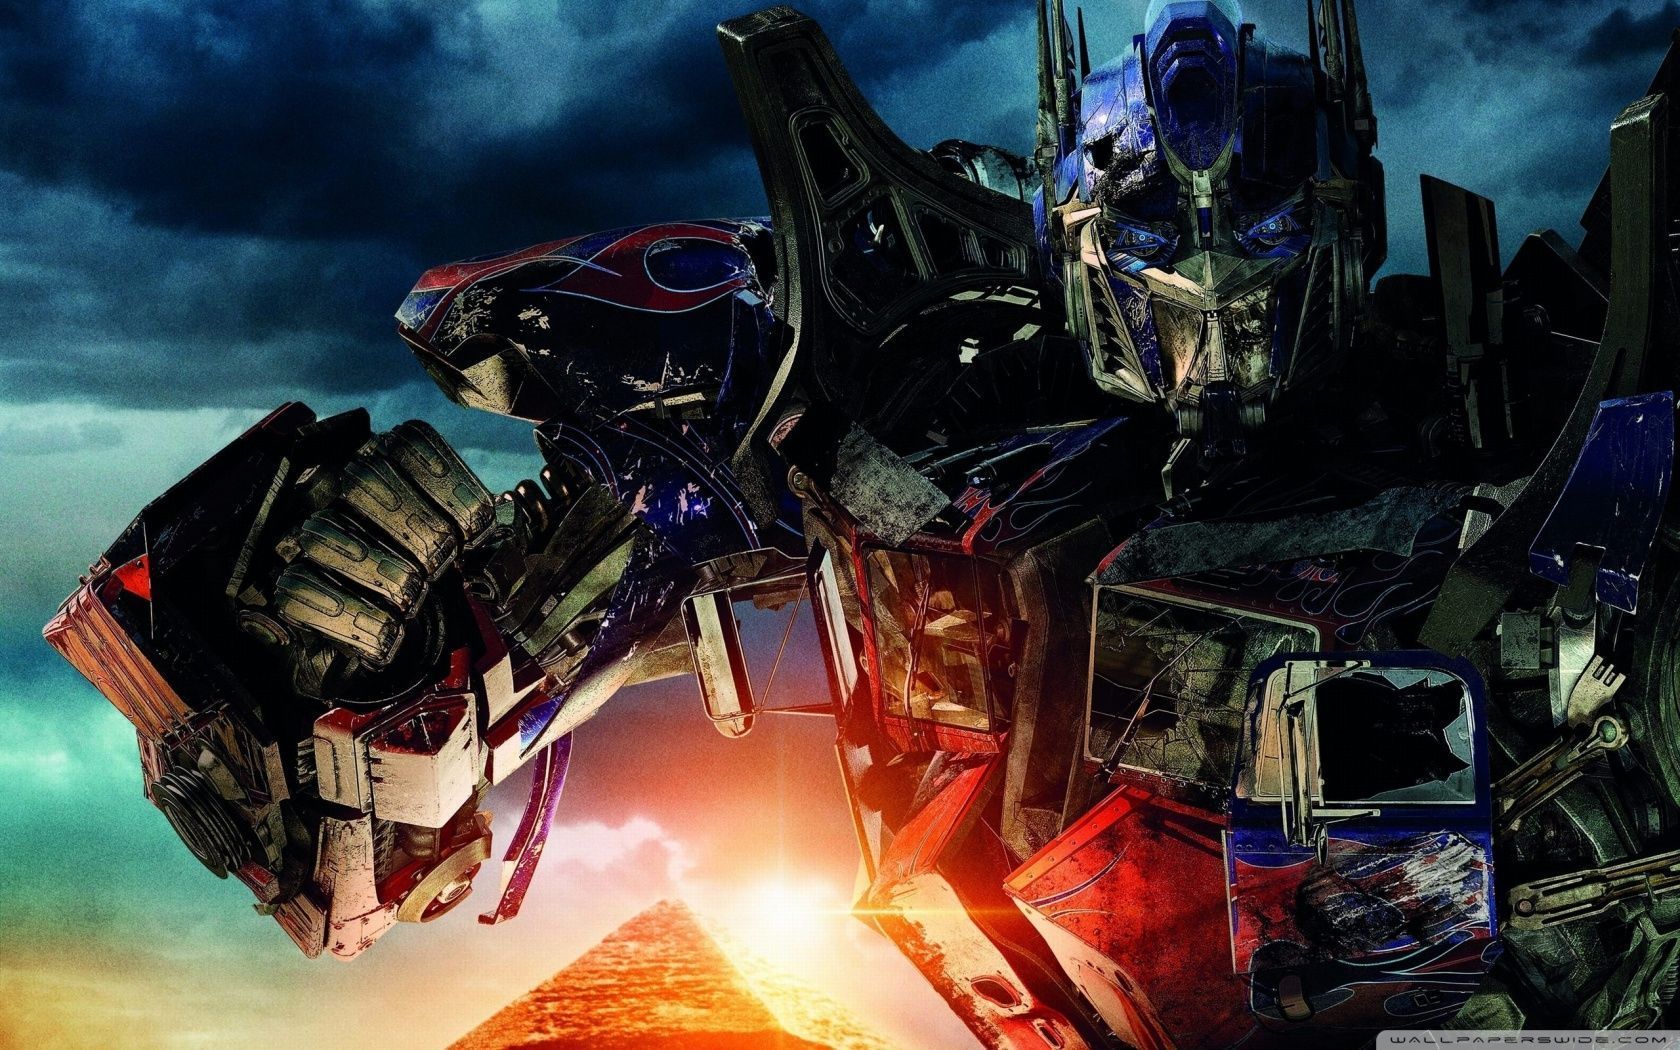 Transformer Optimus Prime Wallpapers Group 82